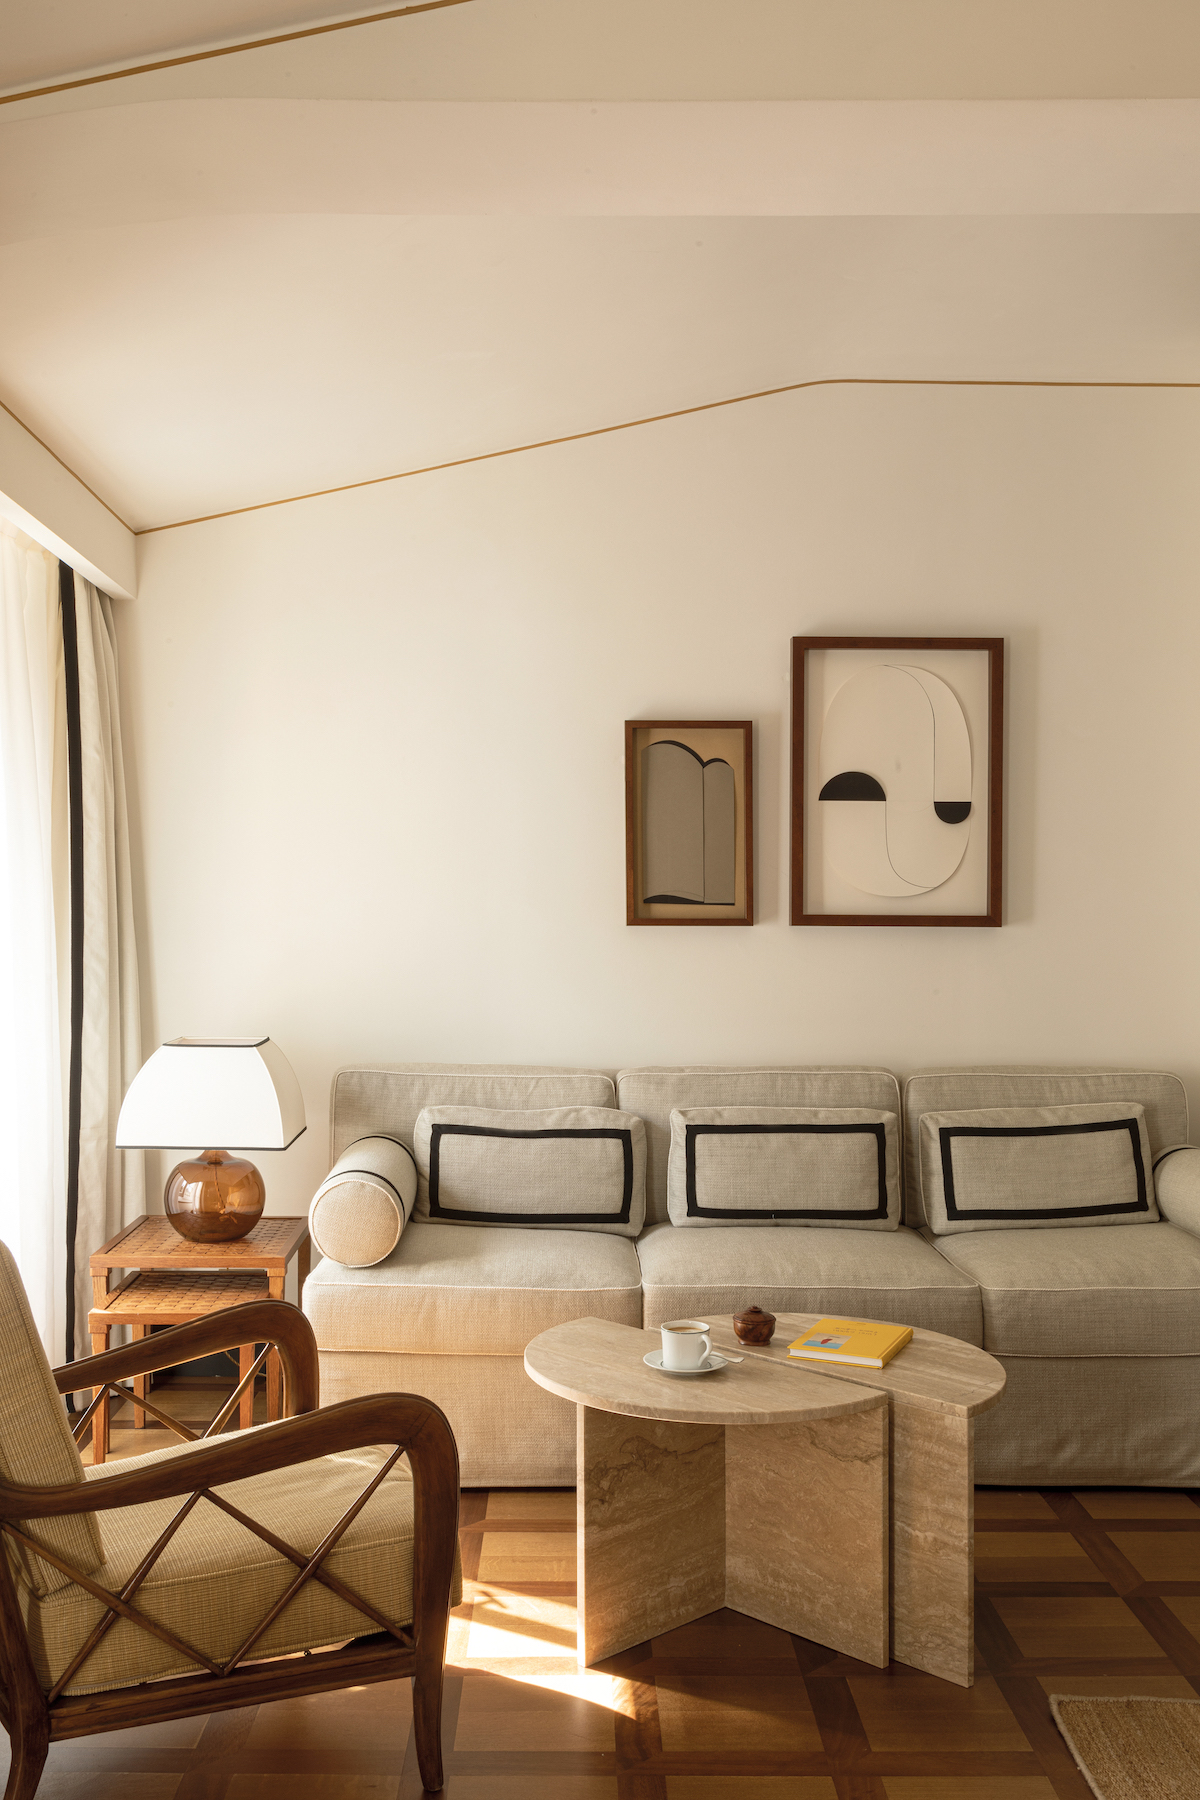 A simple interior design scheme with soft artwork